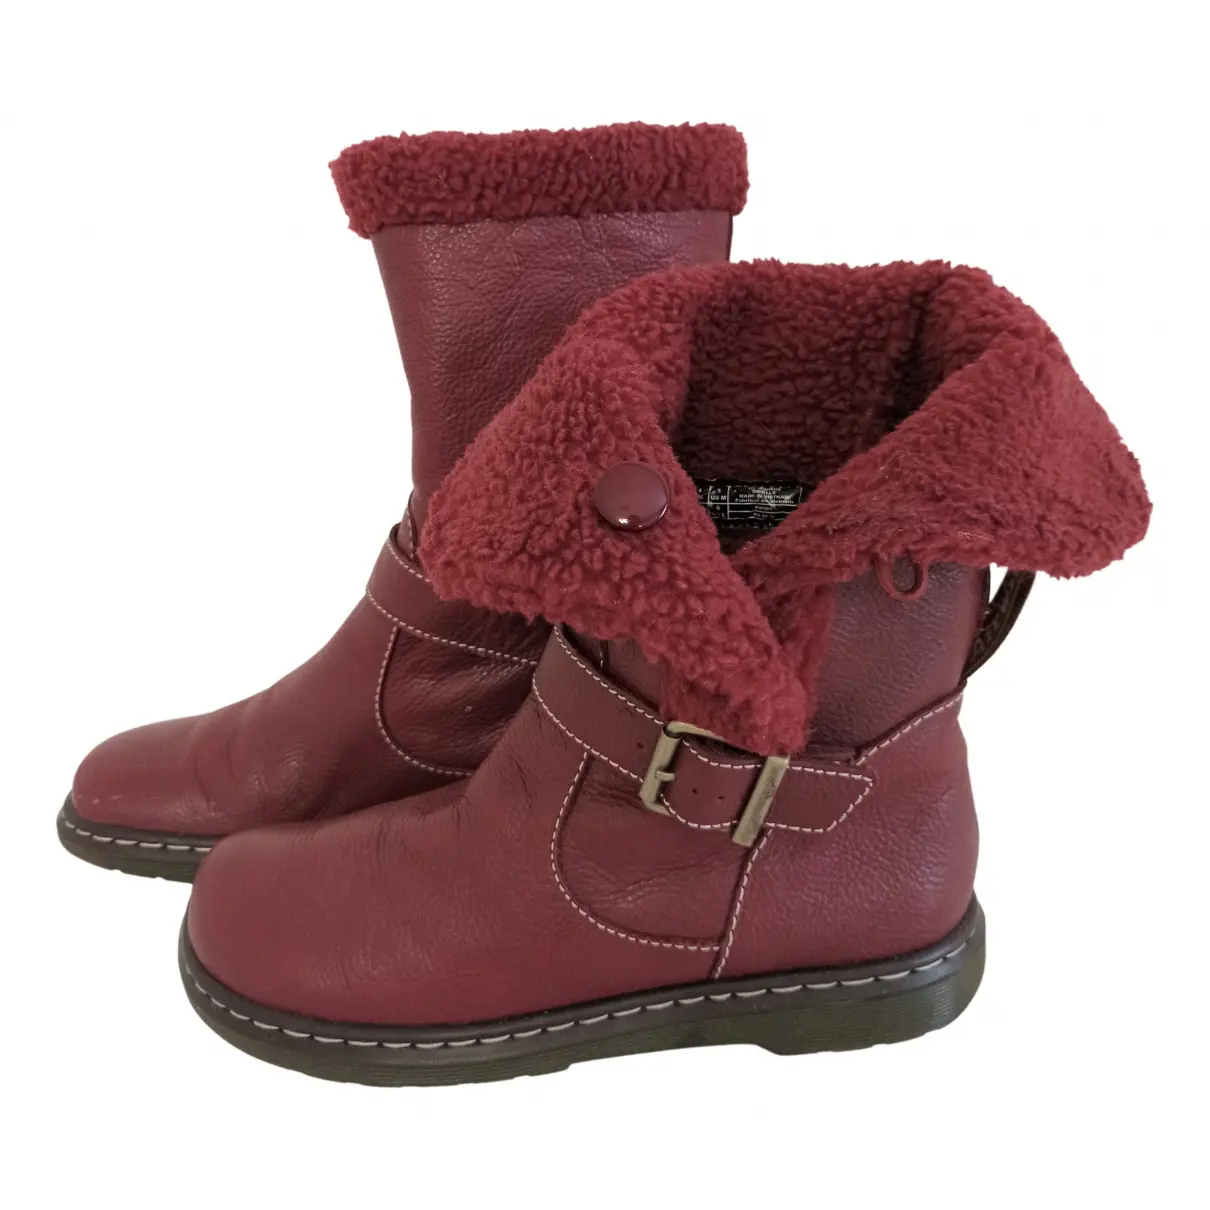 Leather snow boots Dr. Martens - Vintage